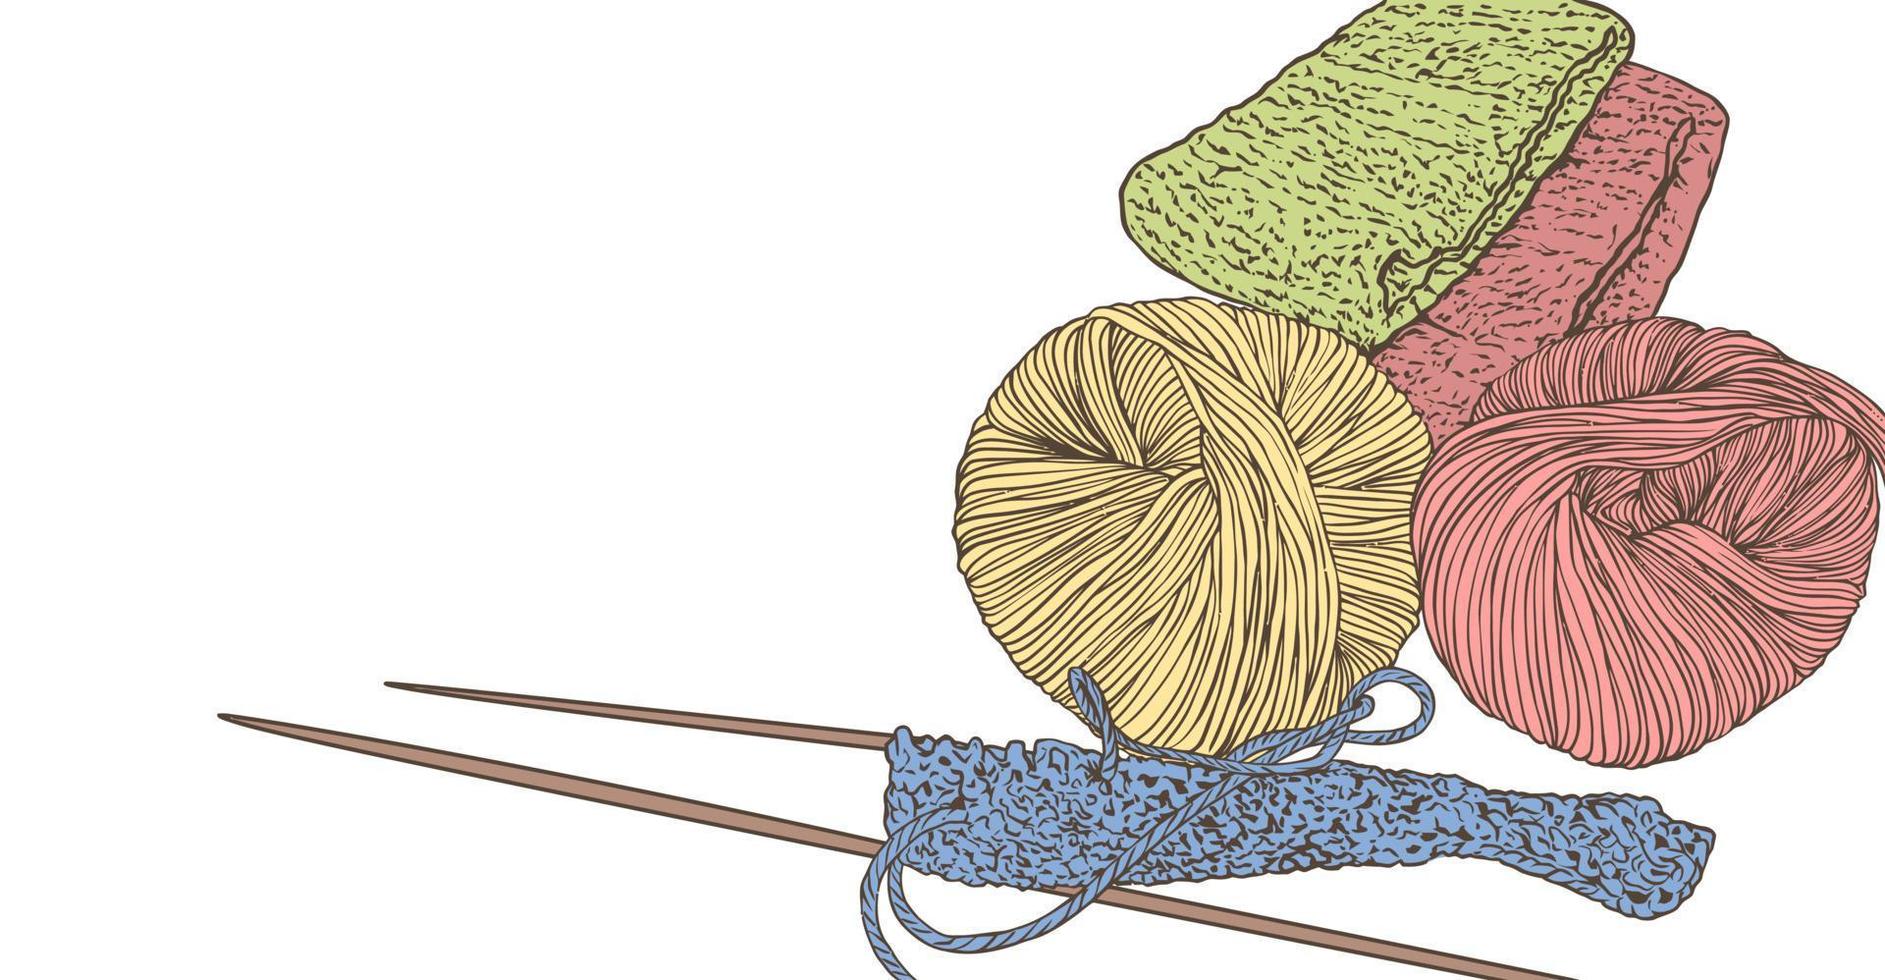 Free vector hand draw detail line art doodle knitting tool, wooden skewers, yarn spools, various colors